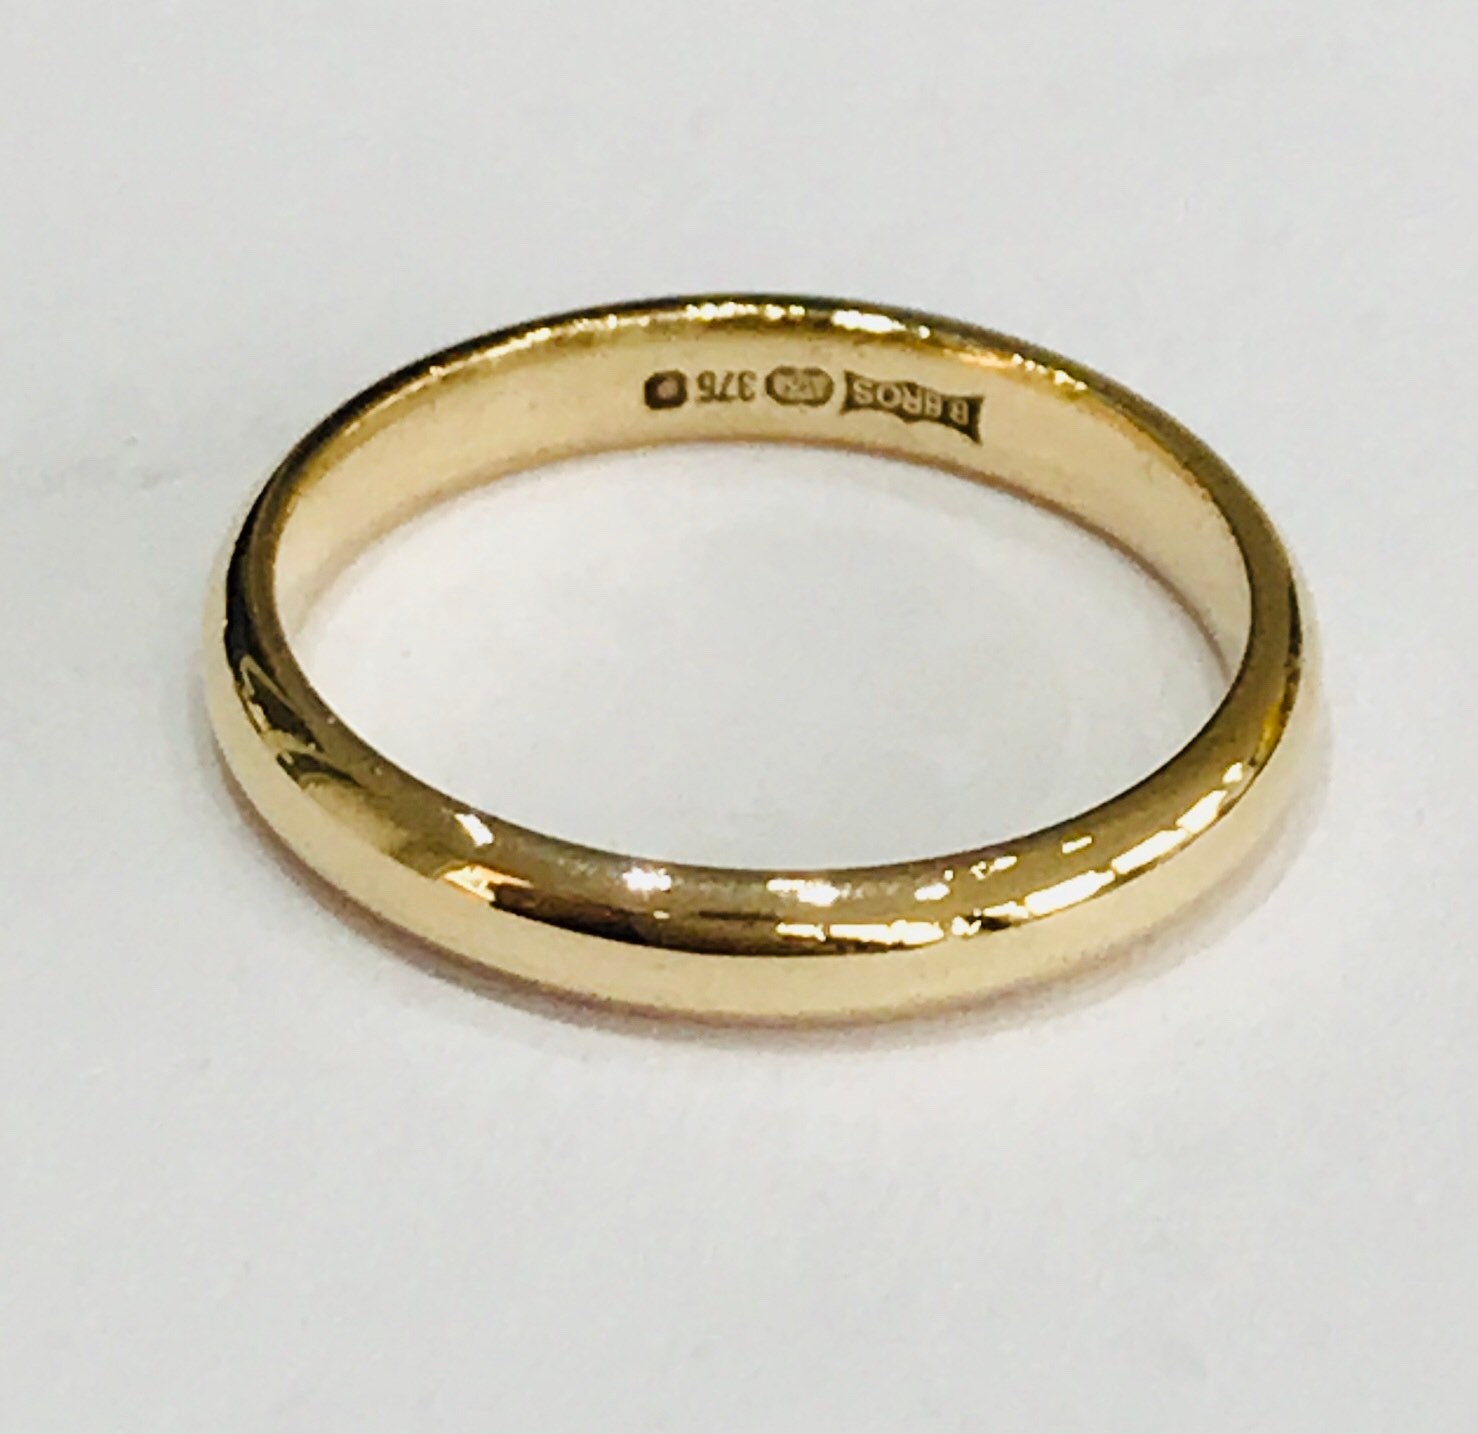 Superb vintage 9ct yellow gold wedding ring - fully hallmarked